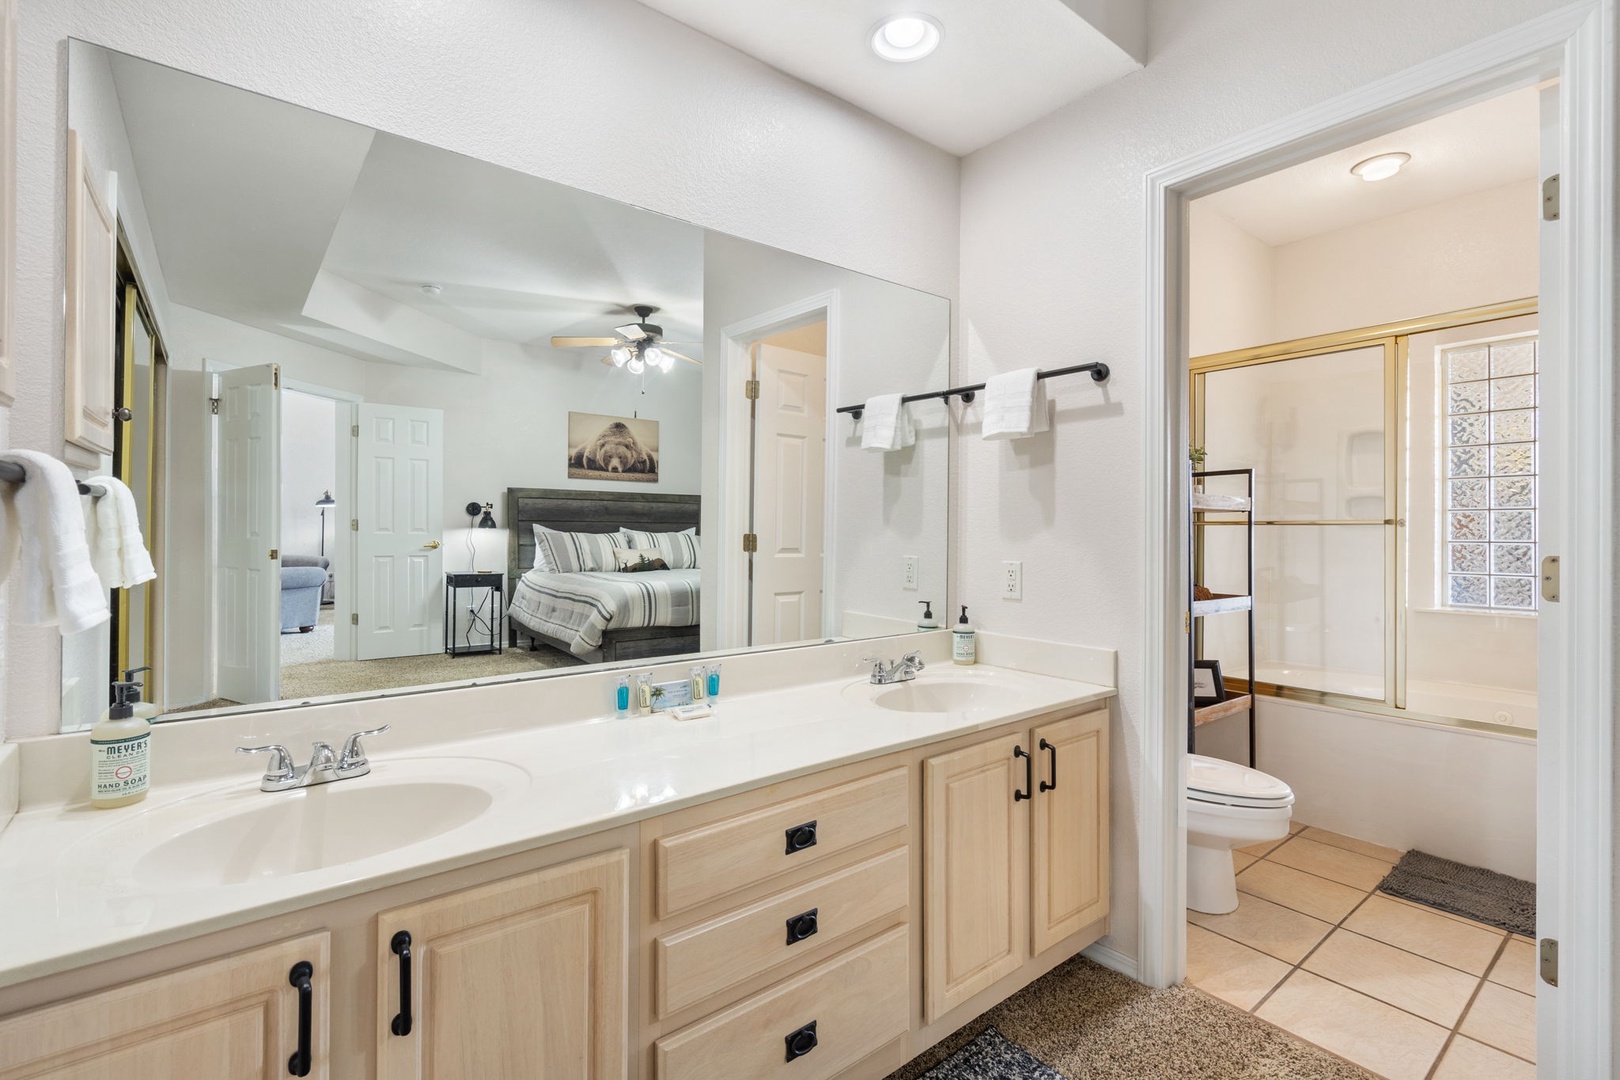 The king en suite bathroom includes a double vanity & shower/tub combo